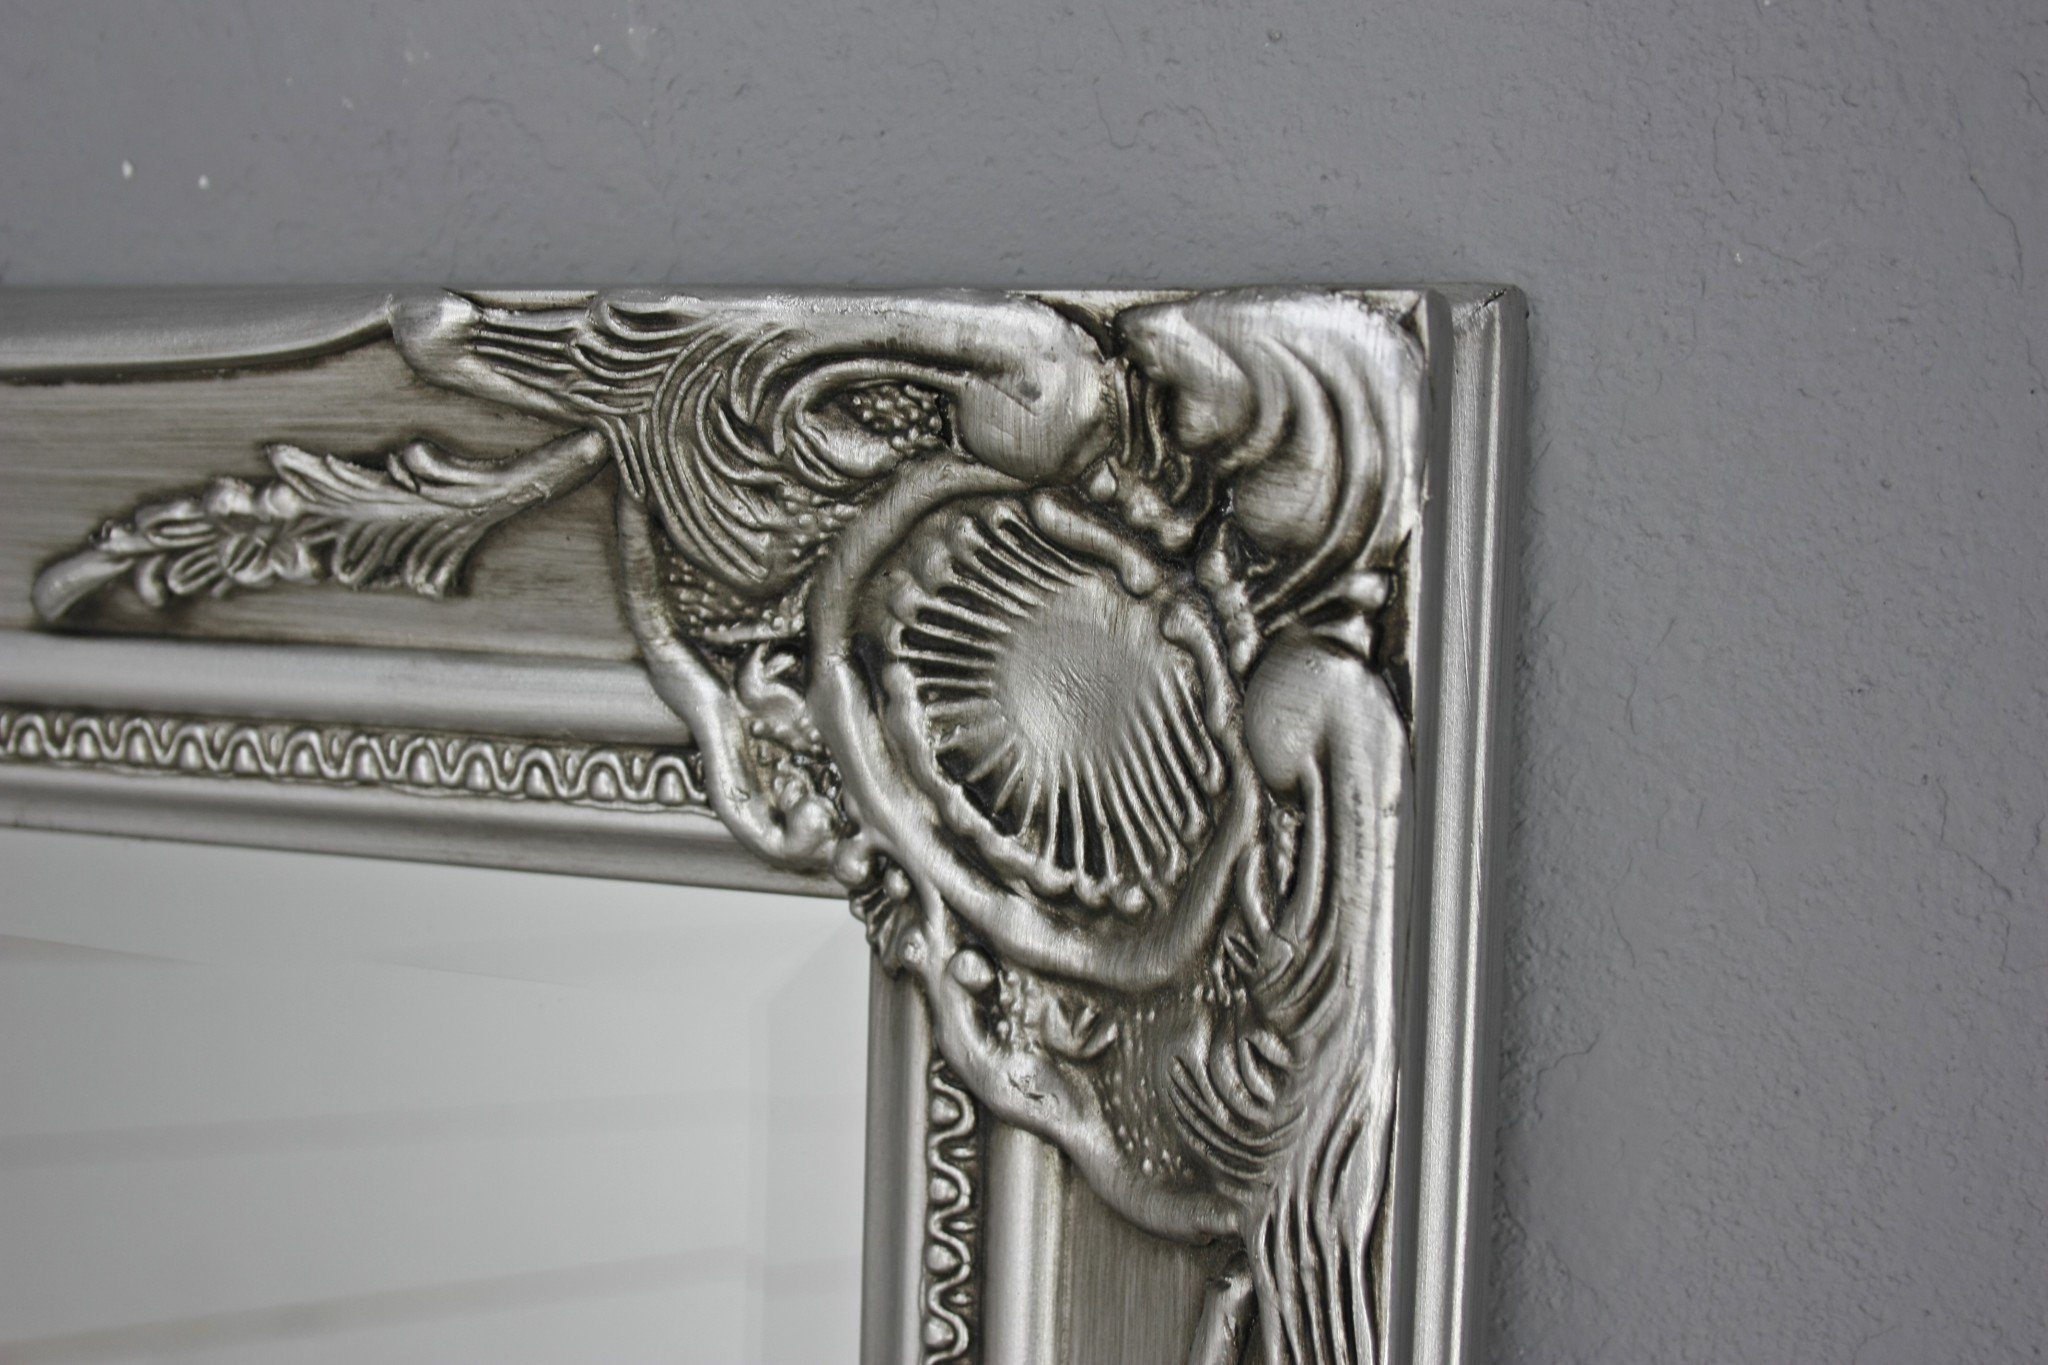 cm Holz, Wandspiegel silber Spiegel: Holz Wandspiegel 82cm barock elbmöbel Spiegel antik 82x62x7 Barock